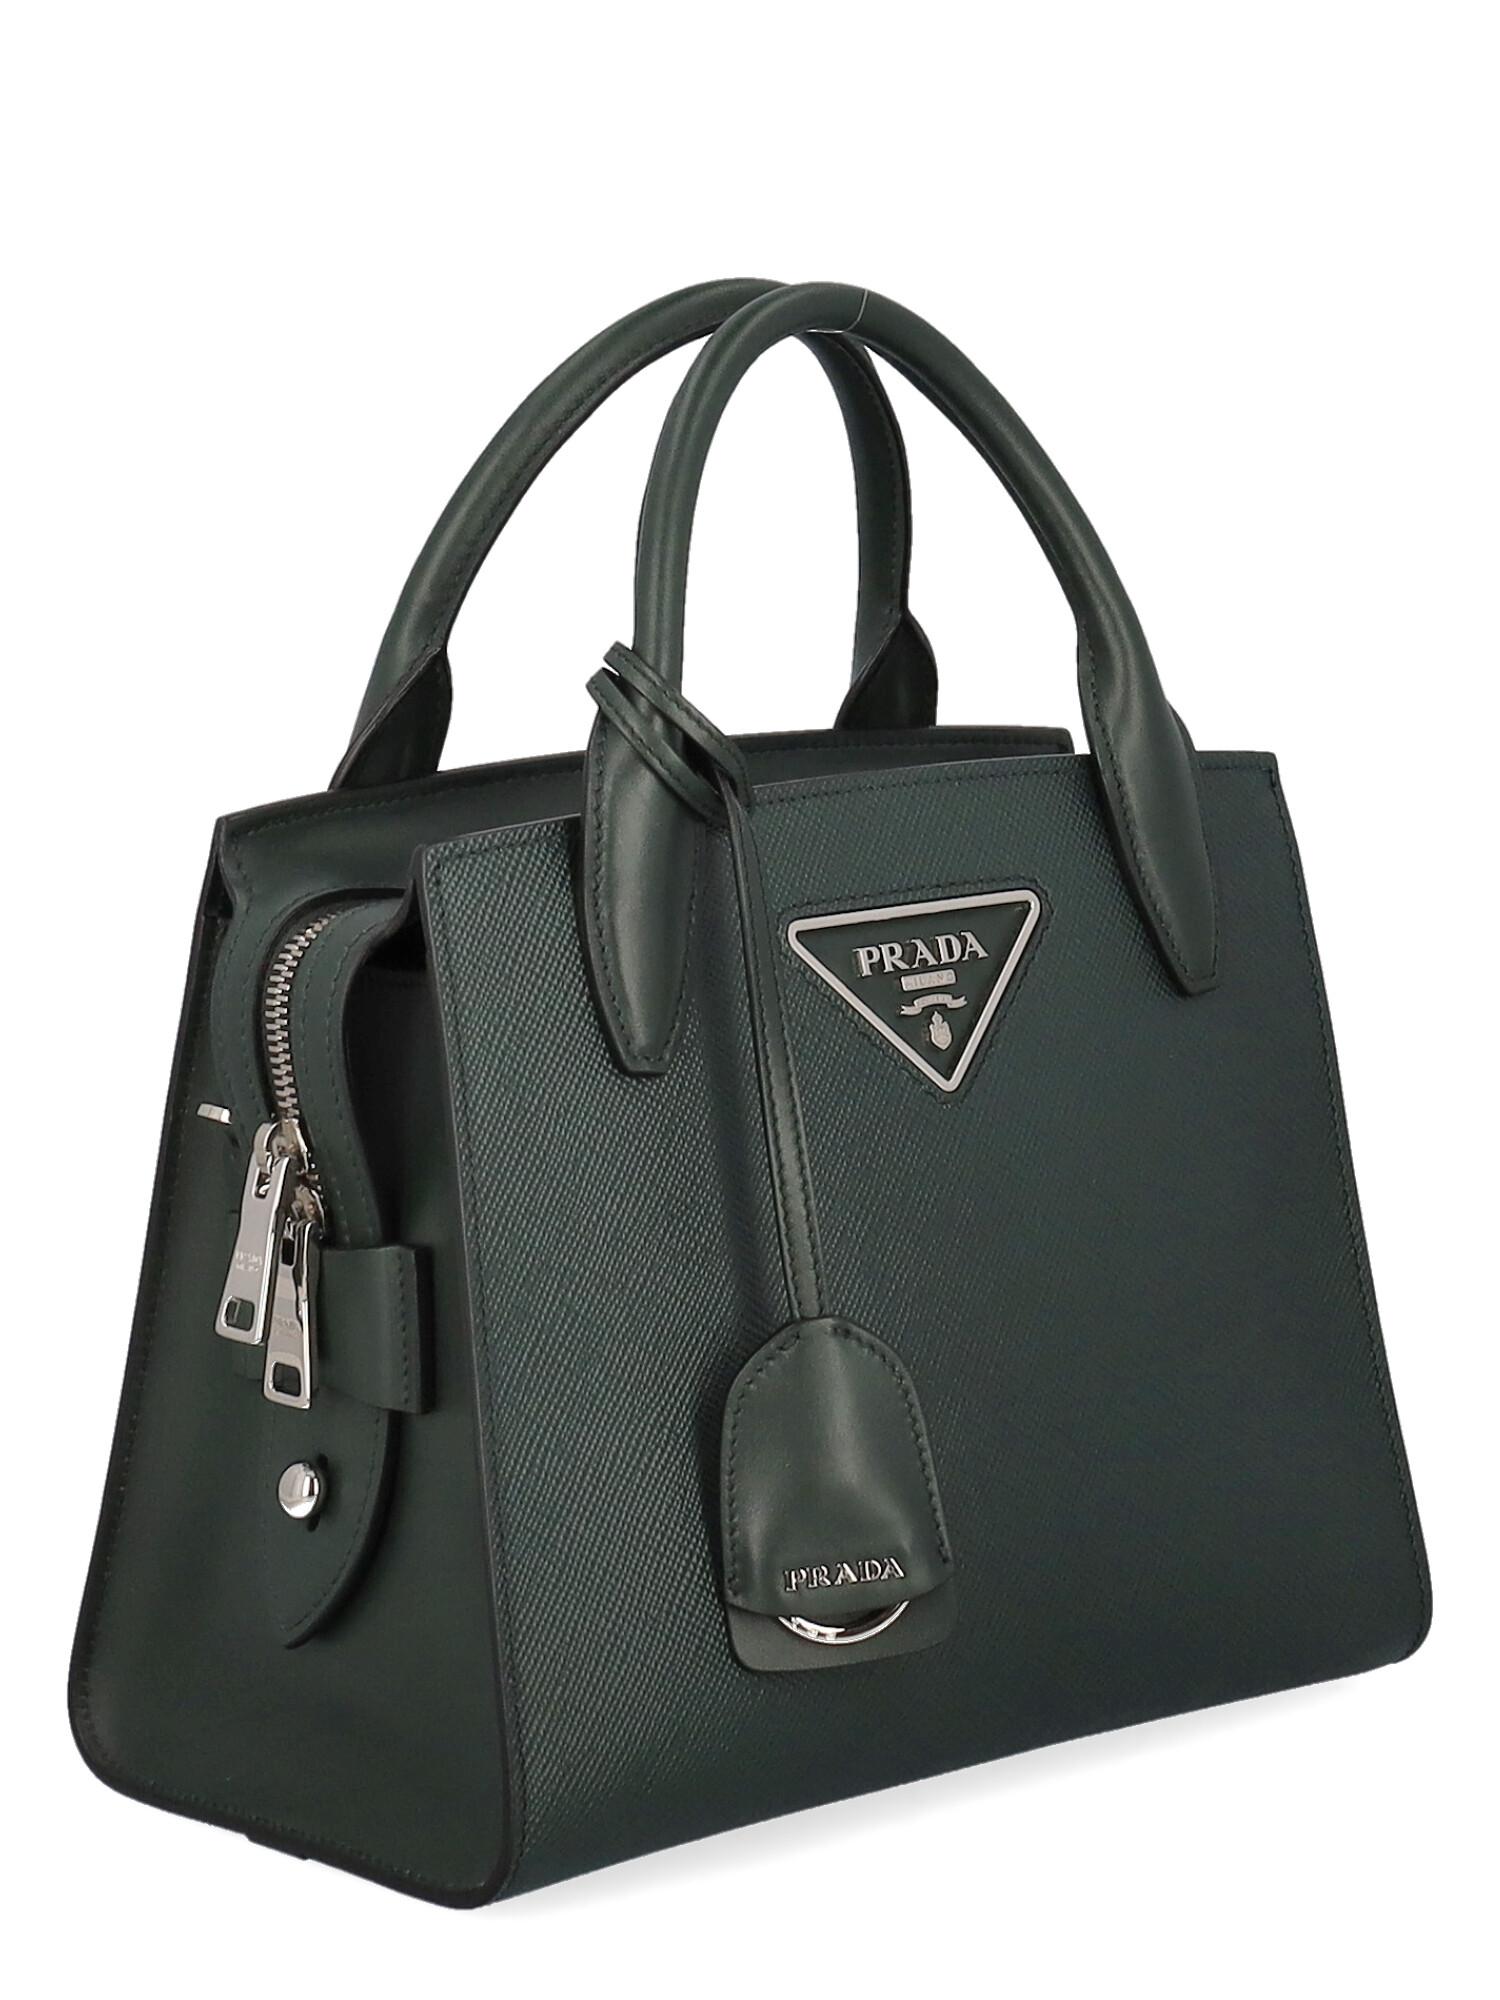 prada handbags green